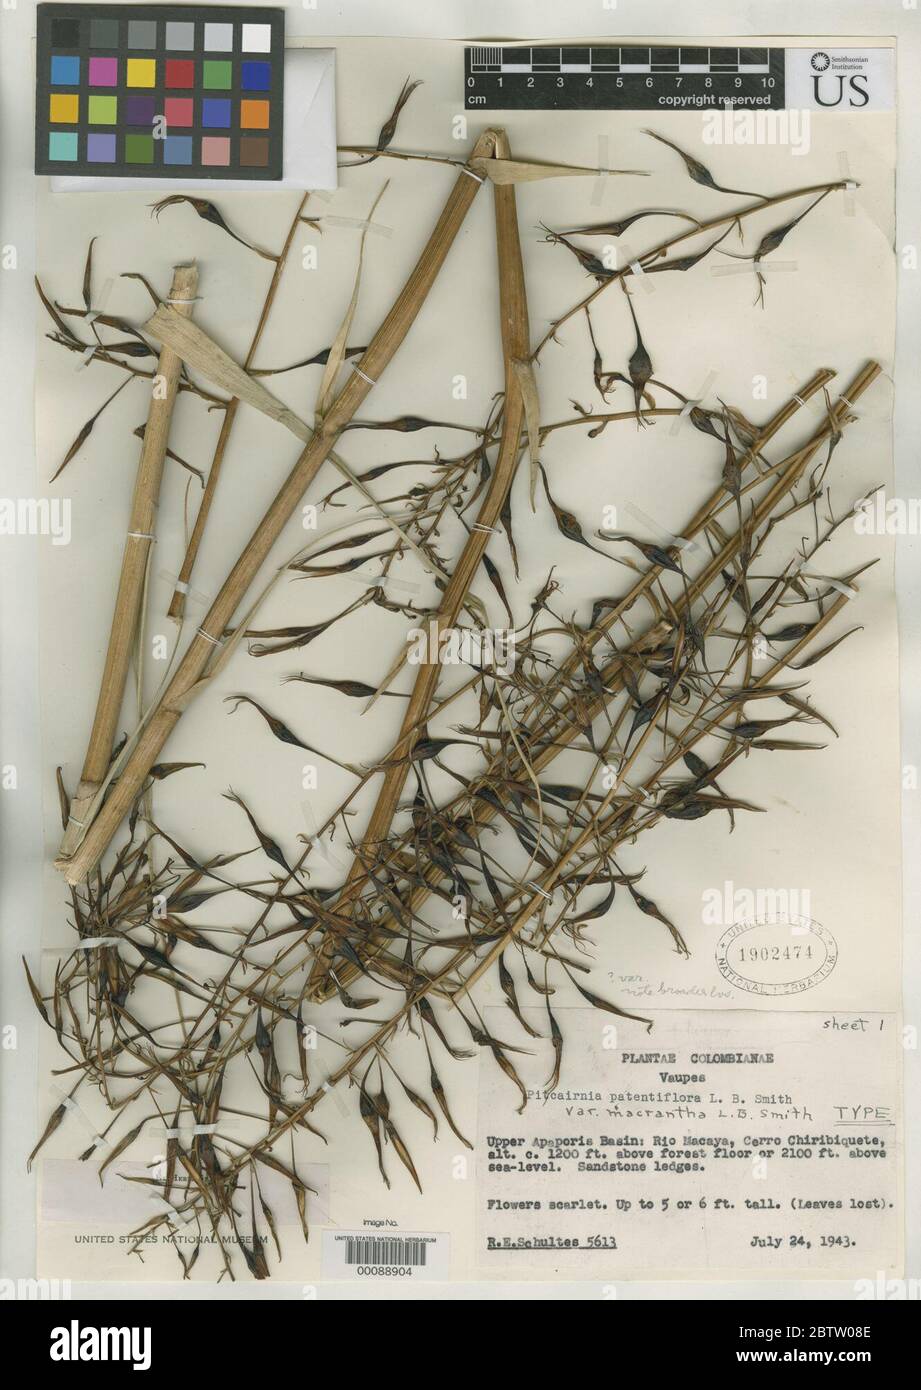 Pitcairnia patentiflora var macrantha LB Sm. Stock Photo